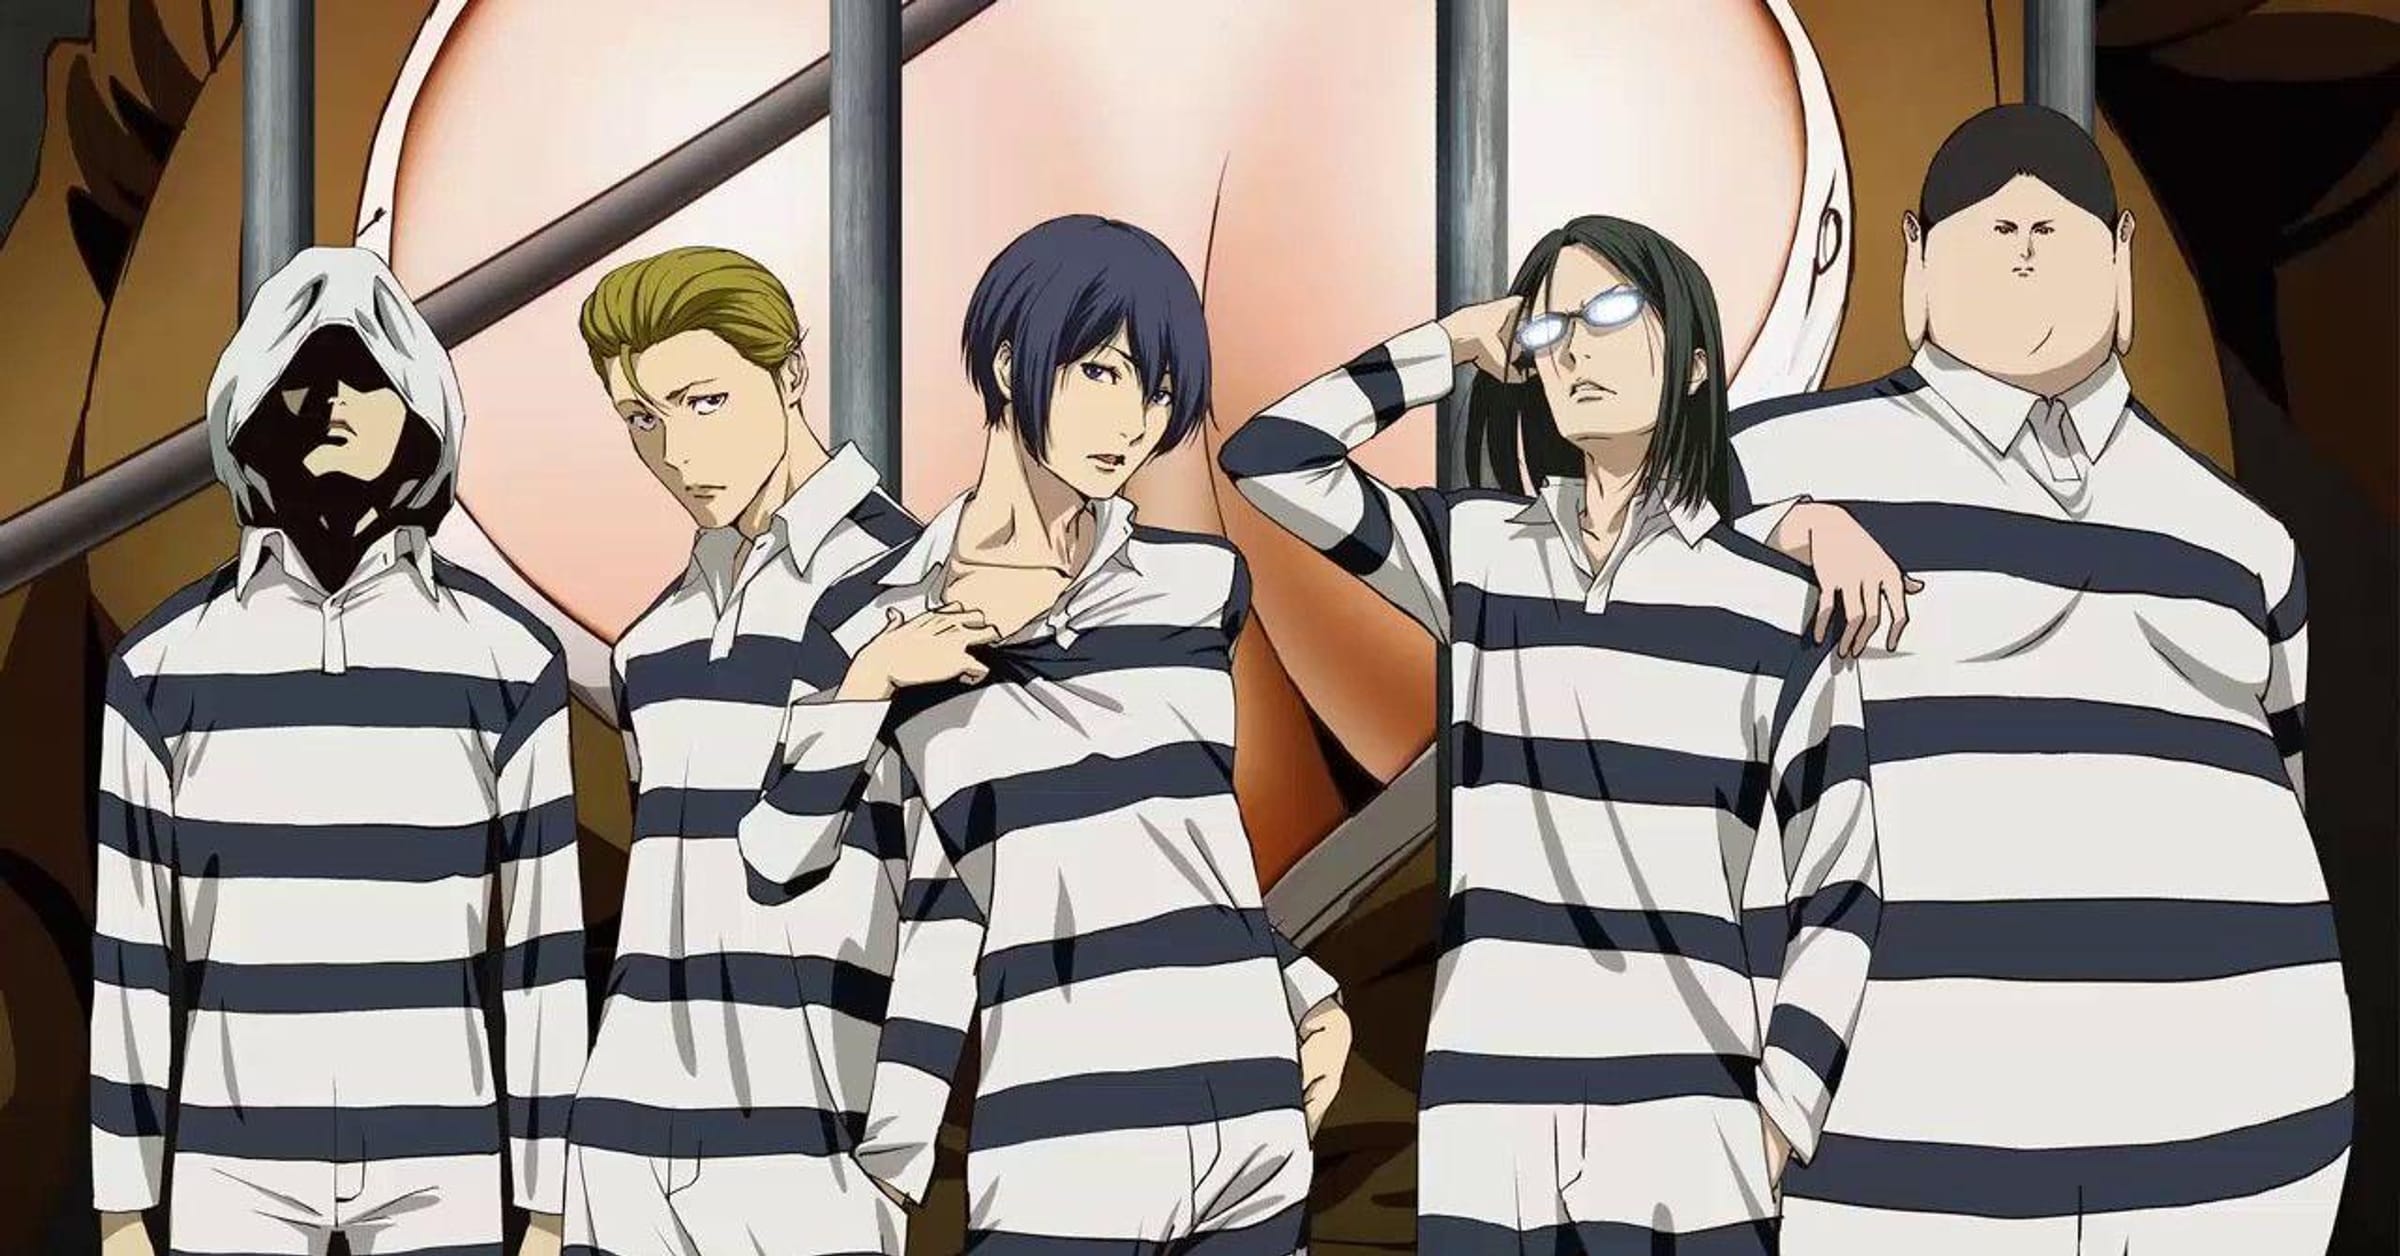 Anime Like Prison School: Mad Wax